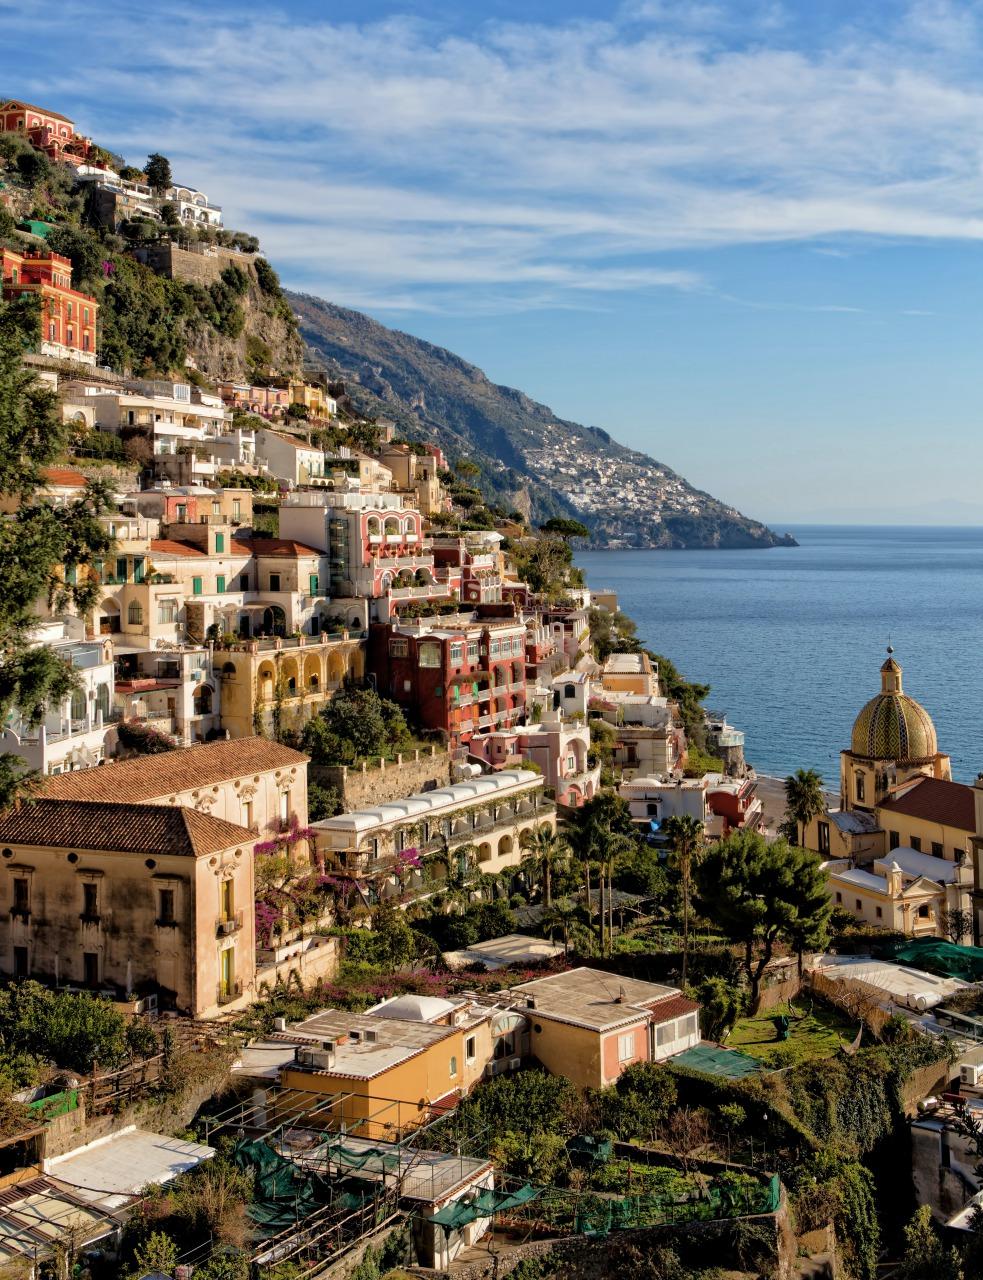 Boat excursions to the Amalfi Coast